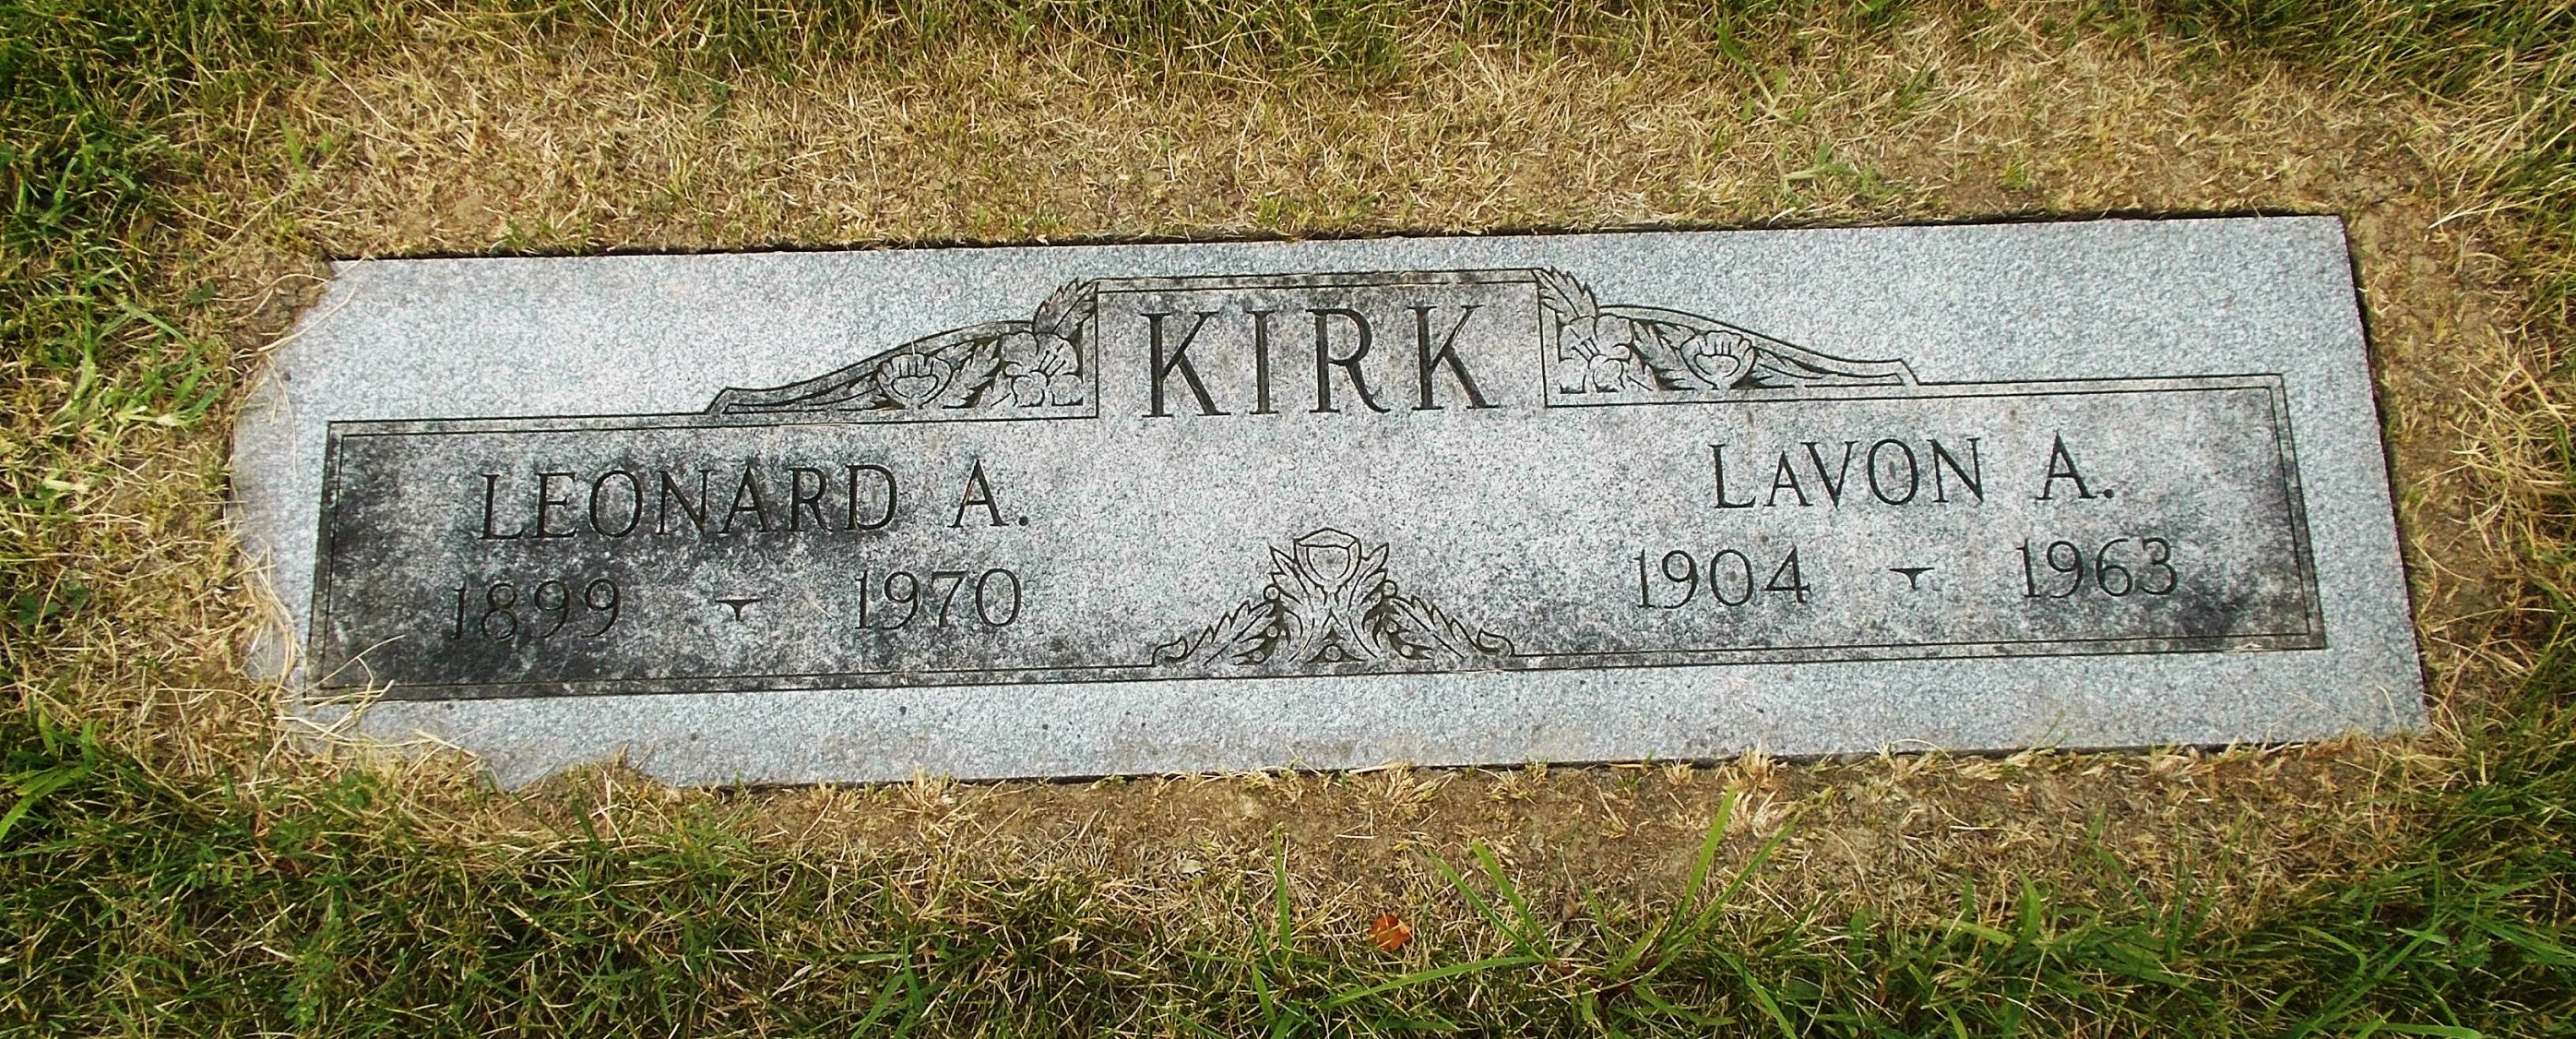 Leonard A Kirk